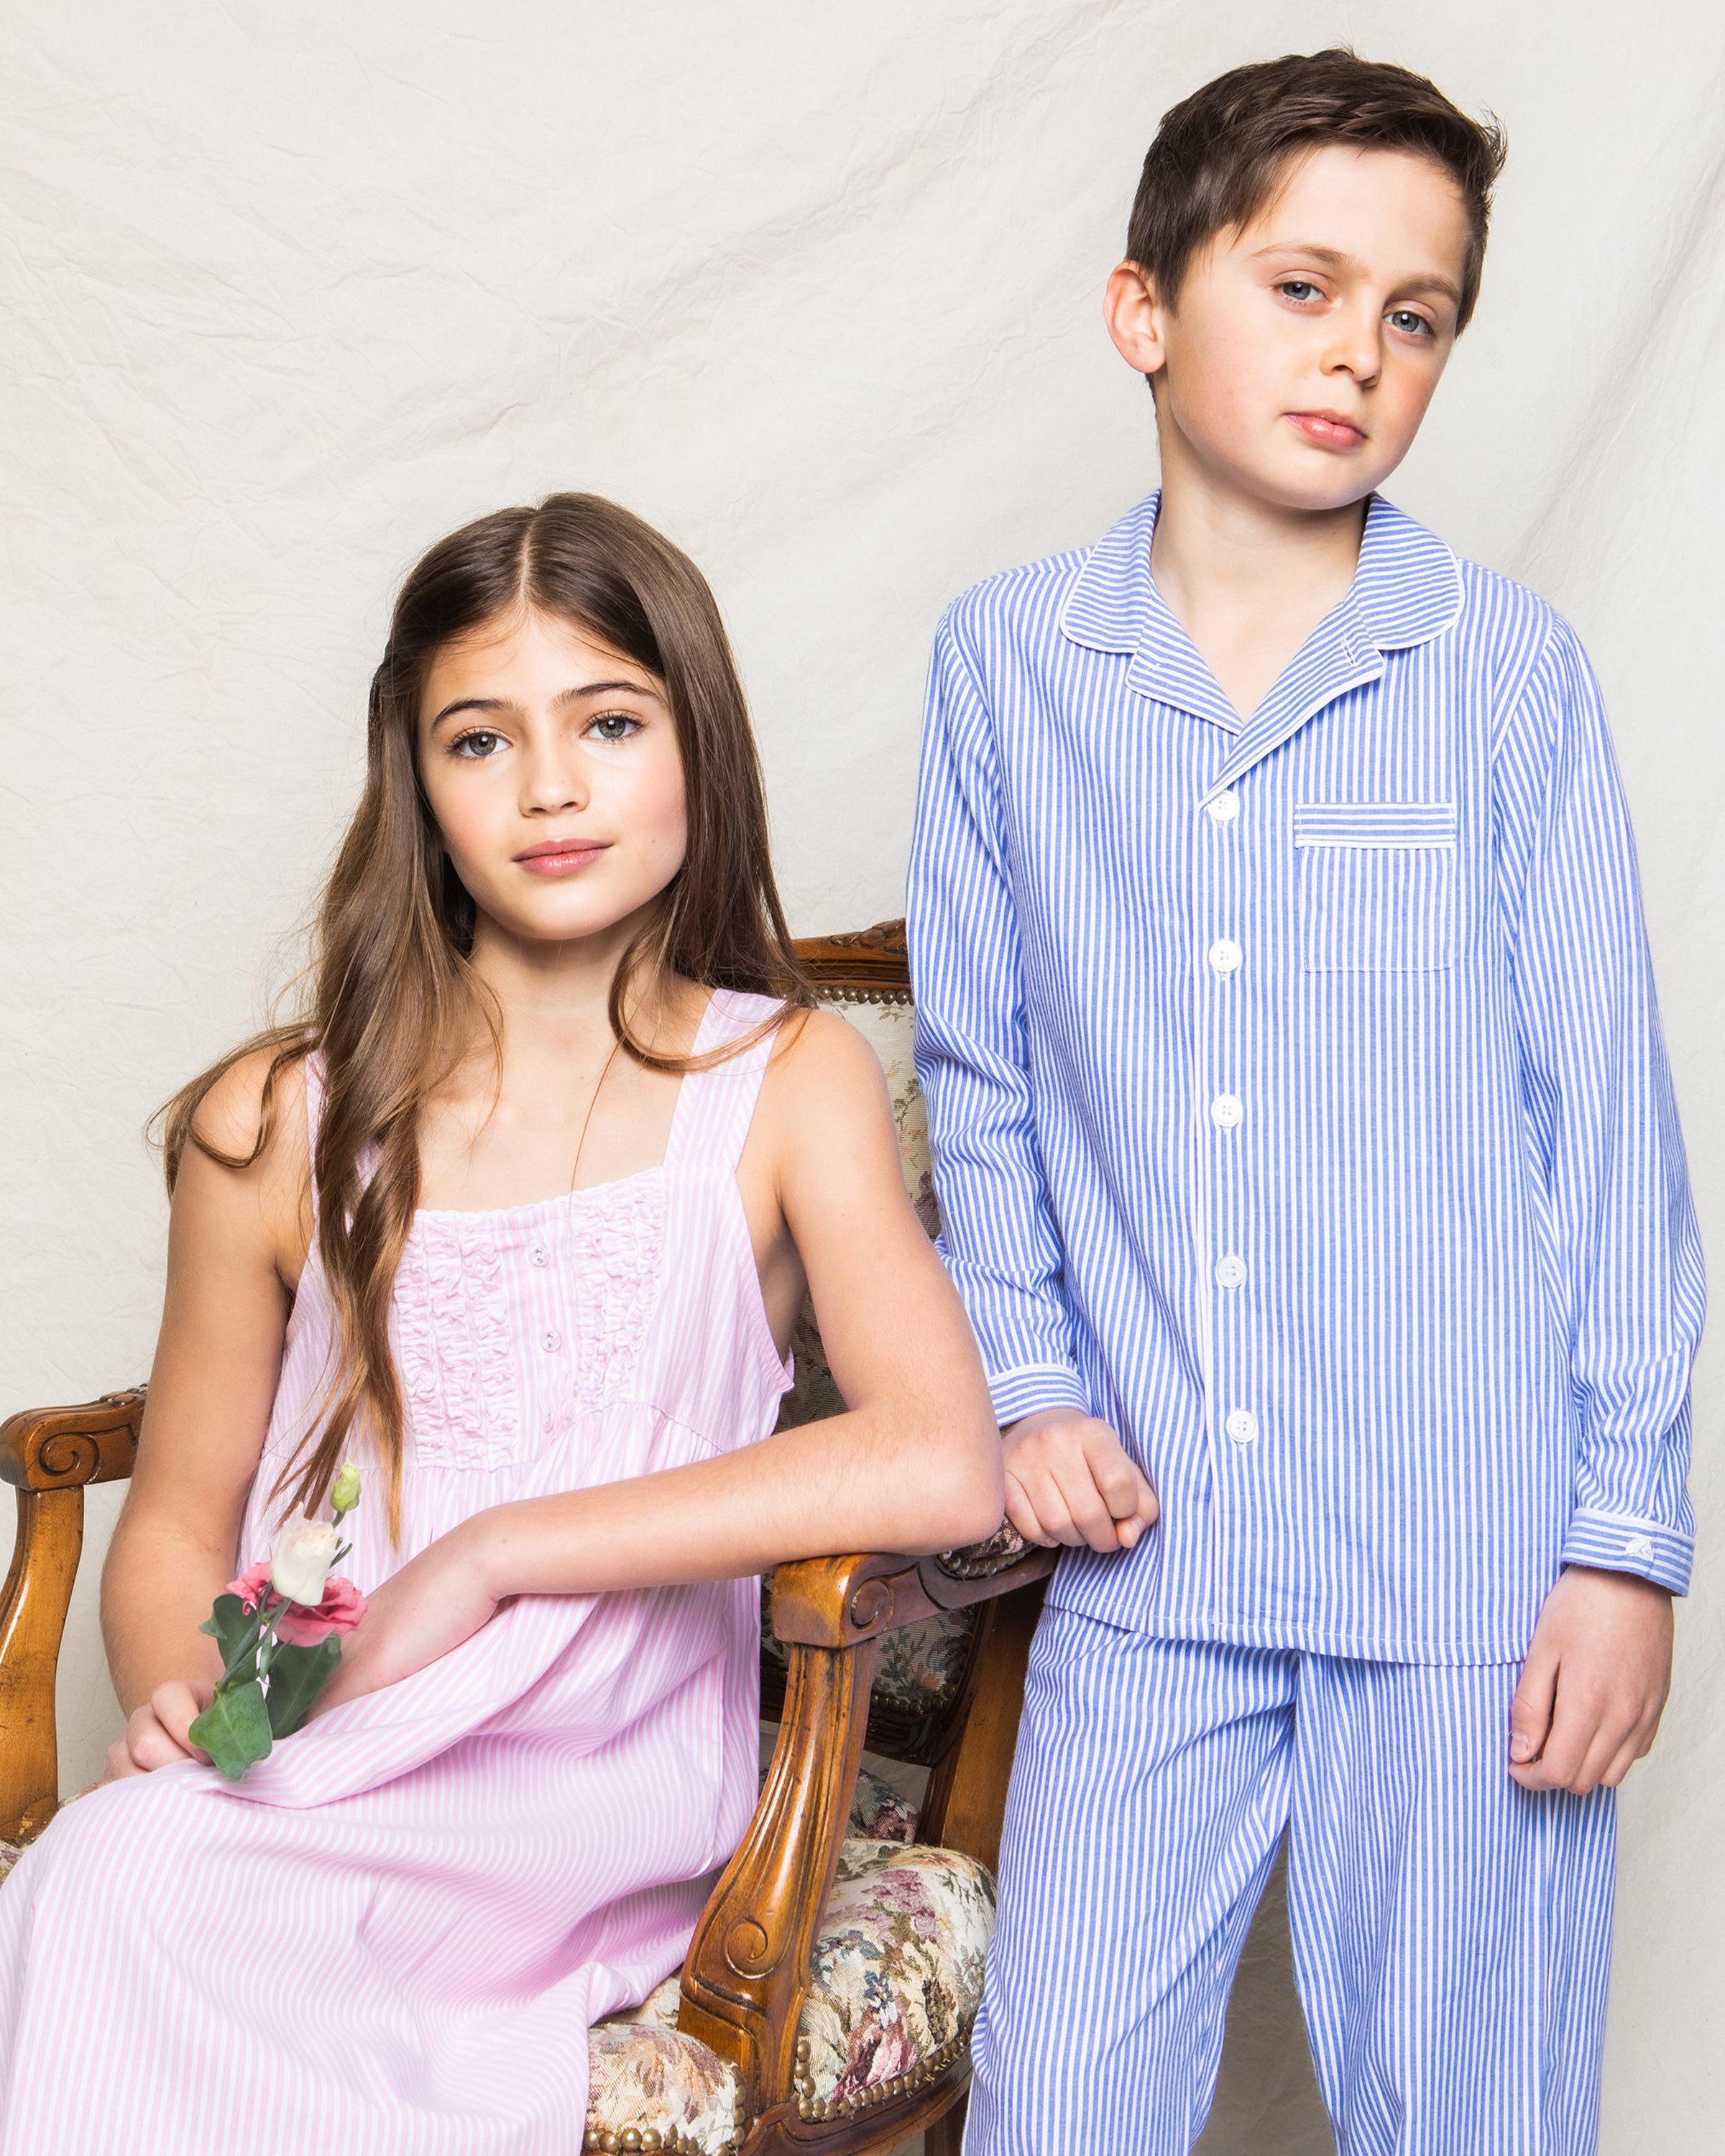 Kid's Twill Pajama Set, French Blue Seersucker